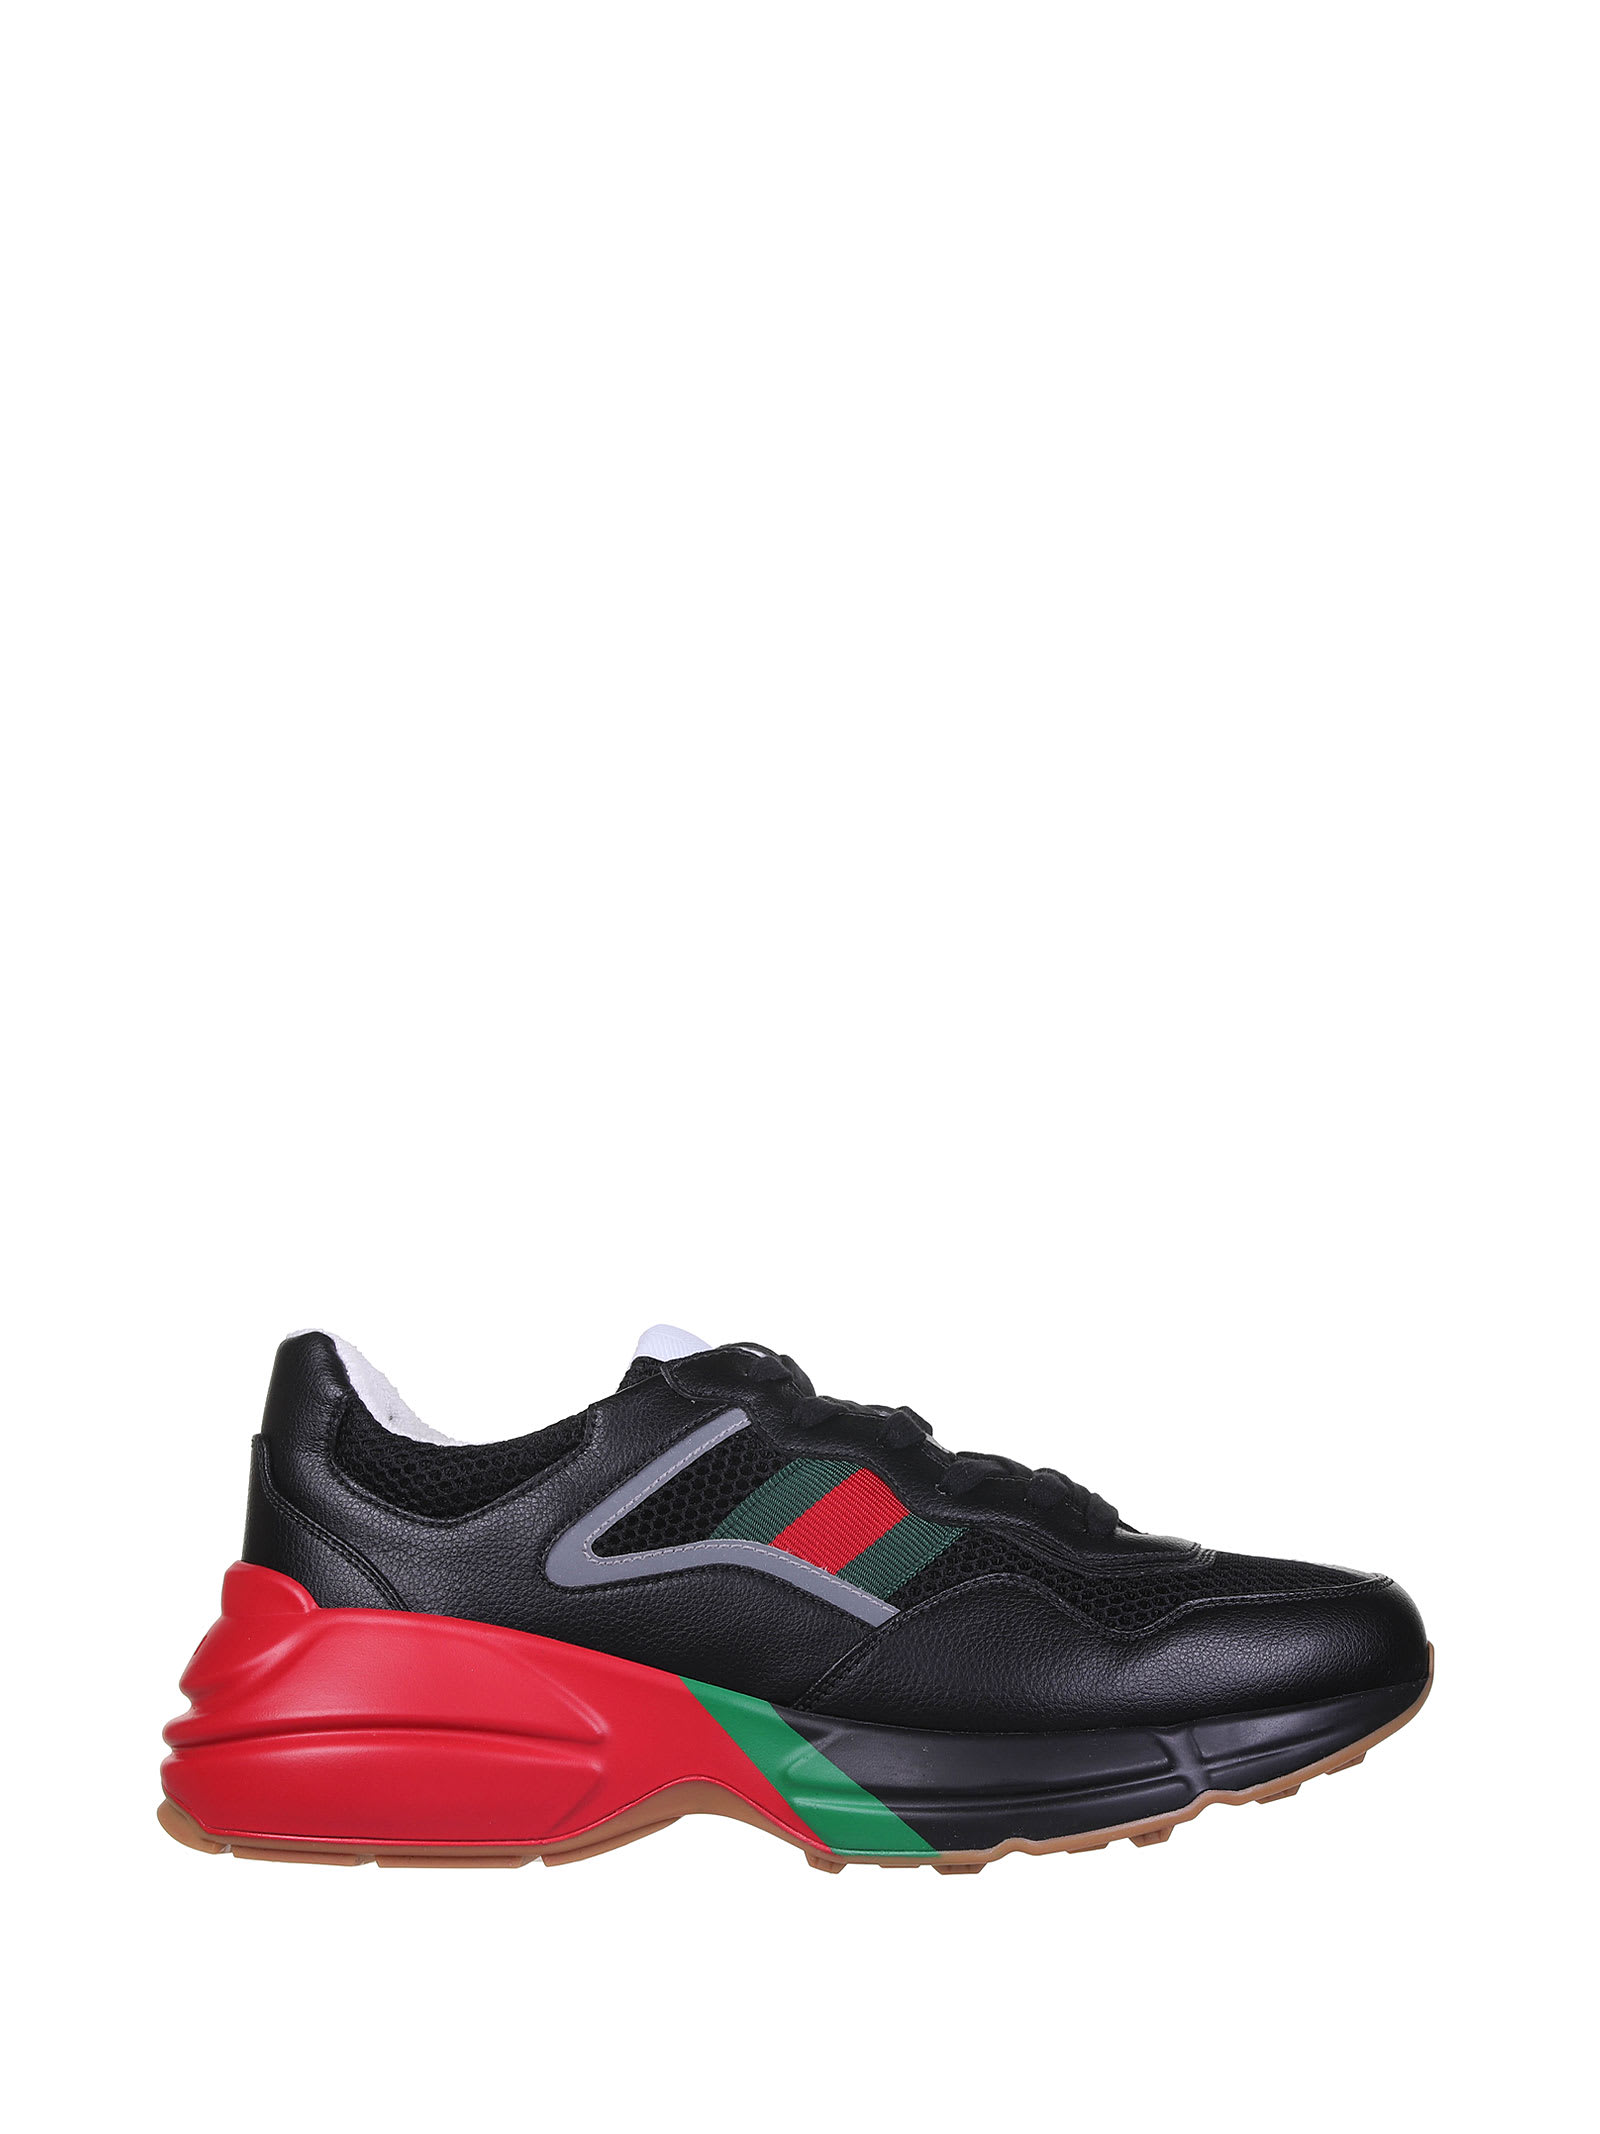 Gucci Rhyton Black Sneakers